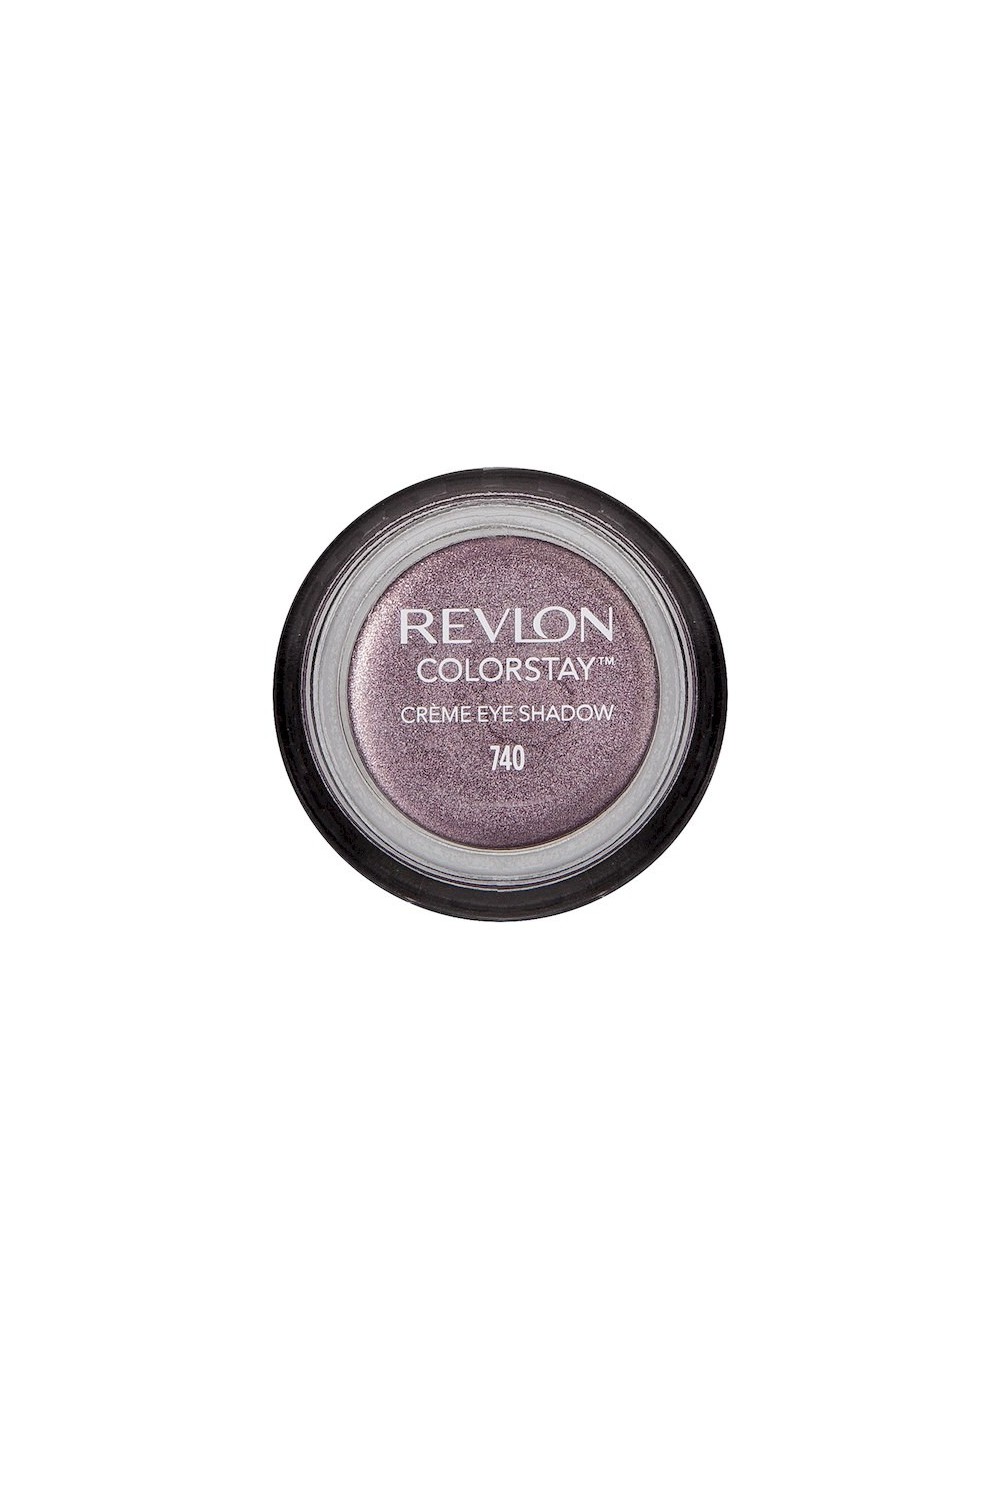 Revlon Colorstay Creme Eye Shadow 740 Black Currant